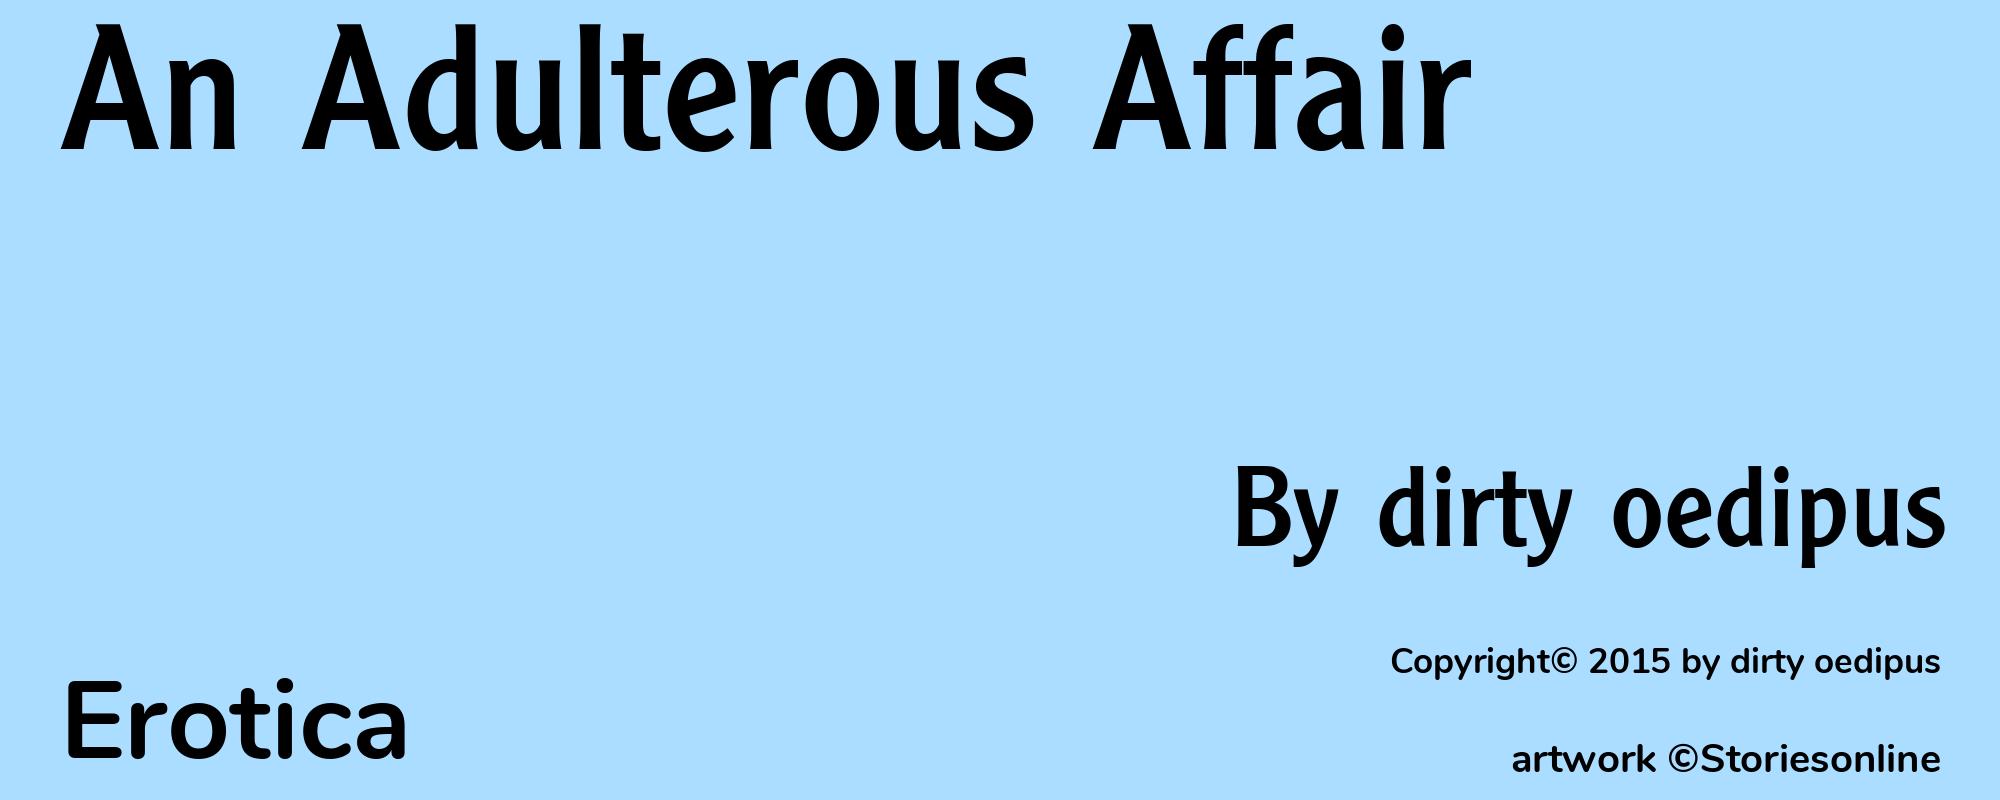 An Adulterous Affair - Cover